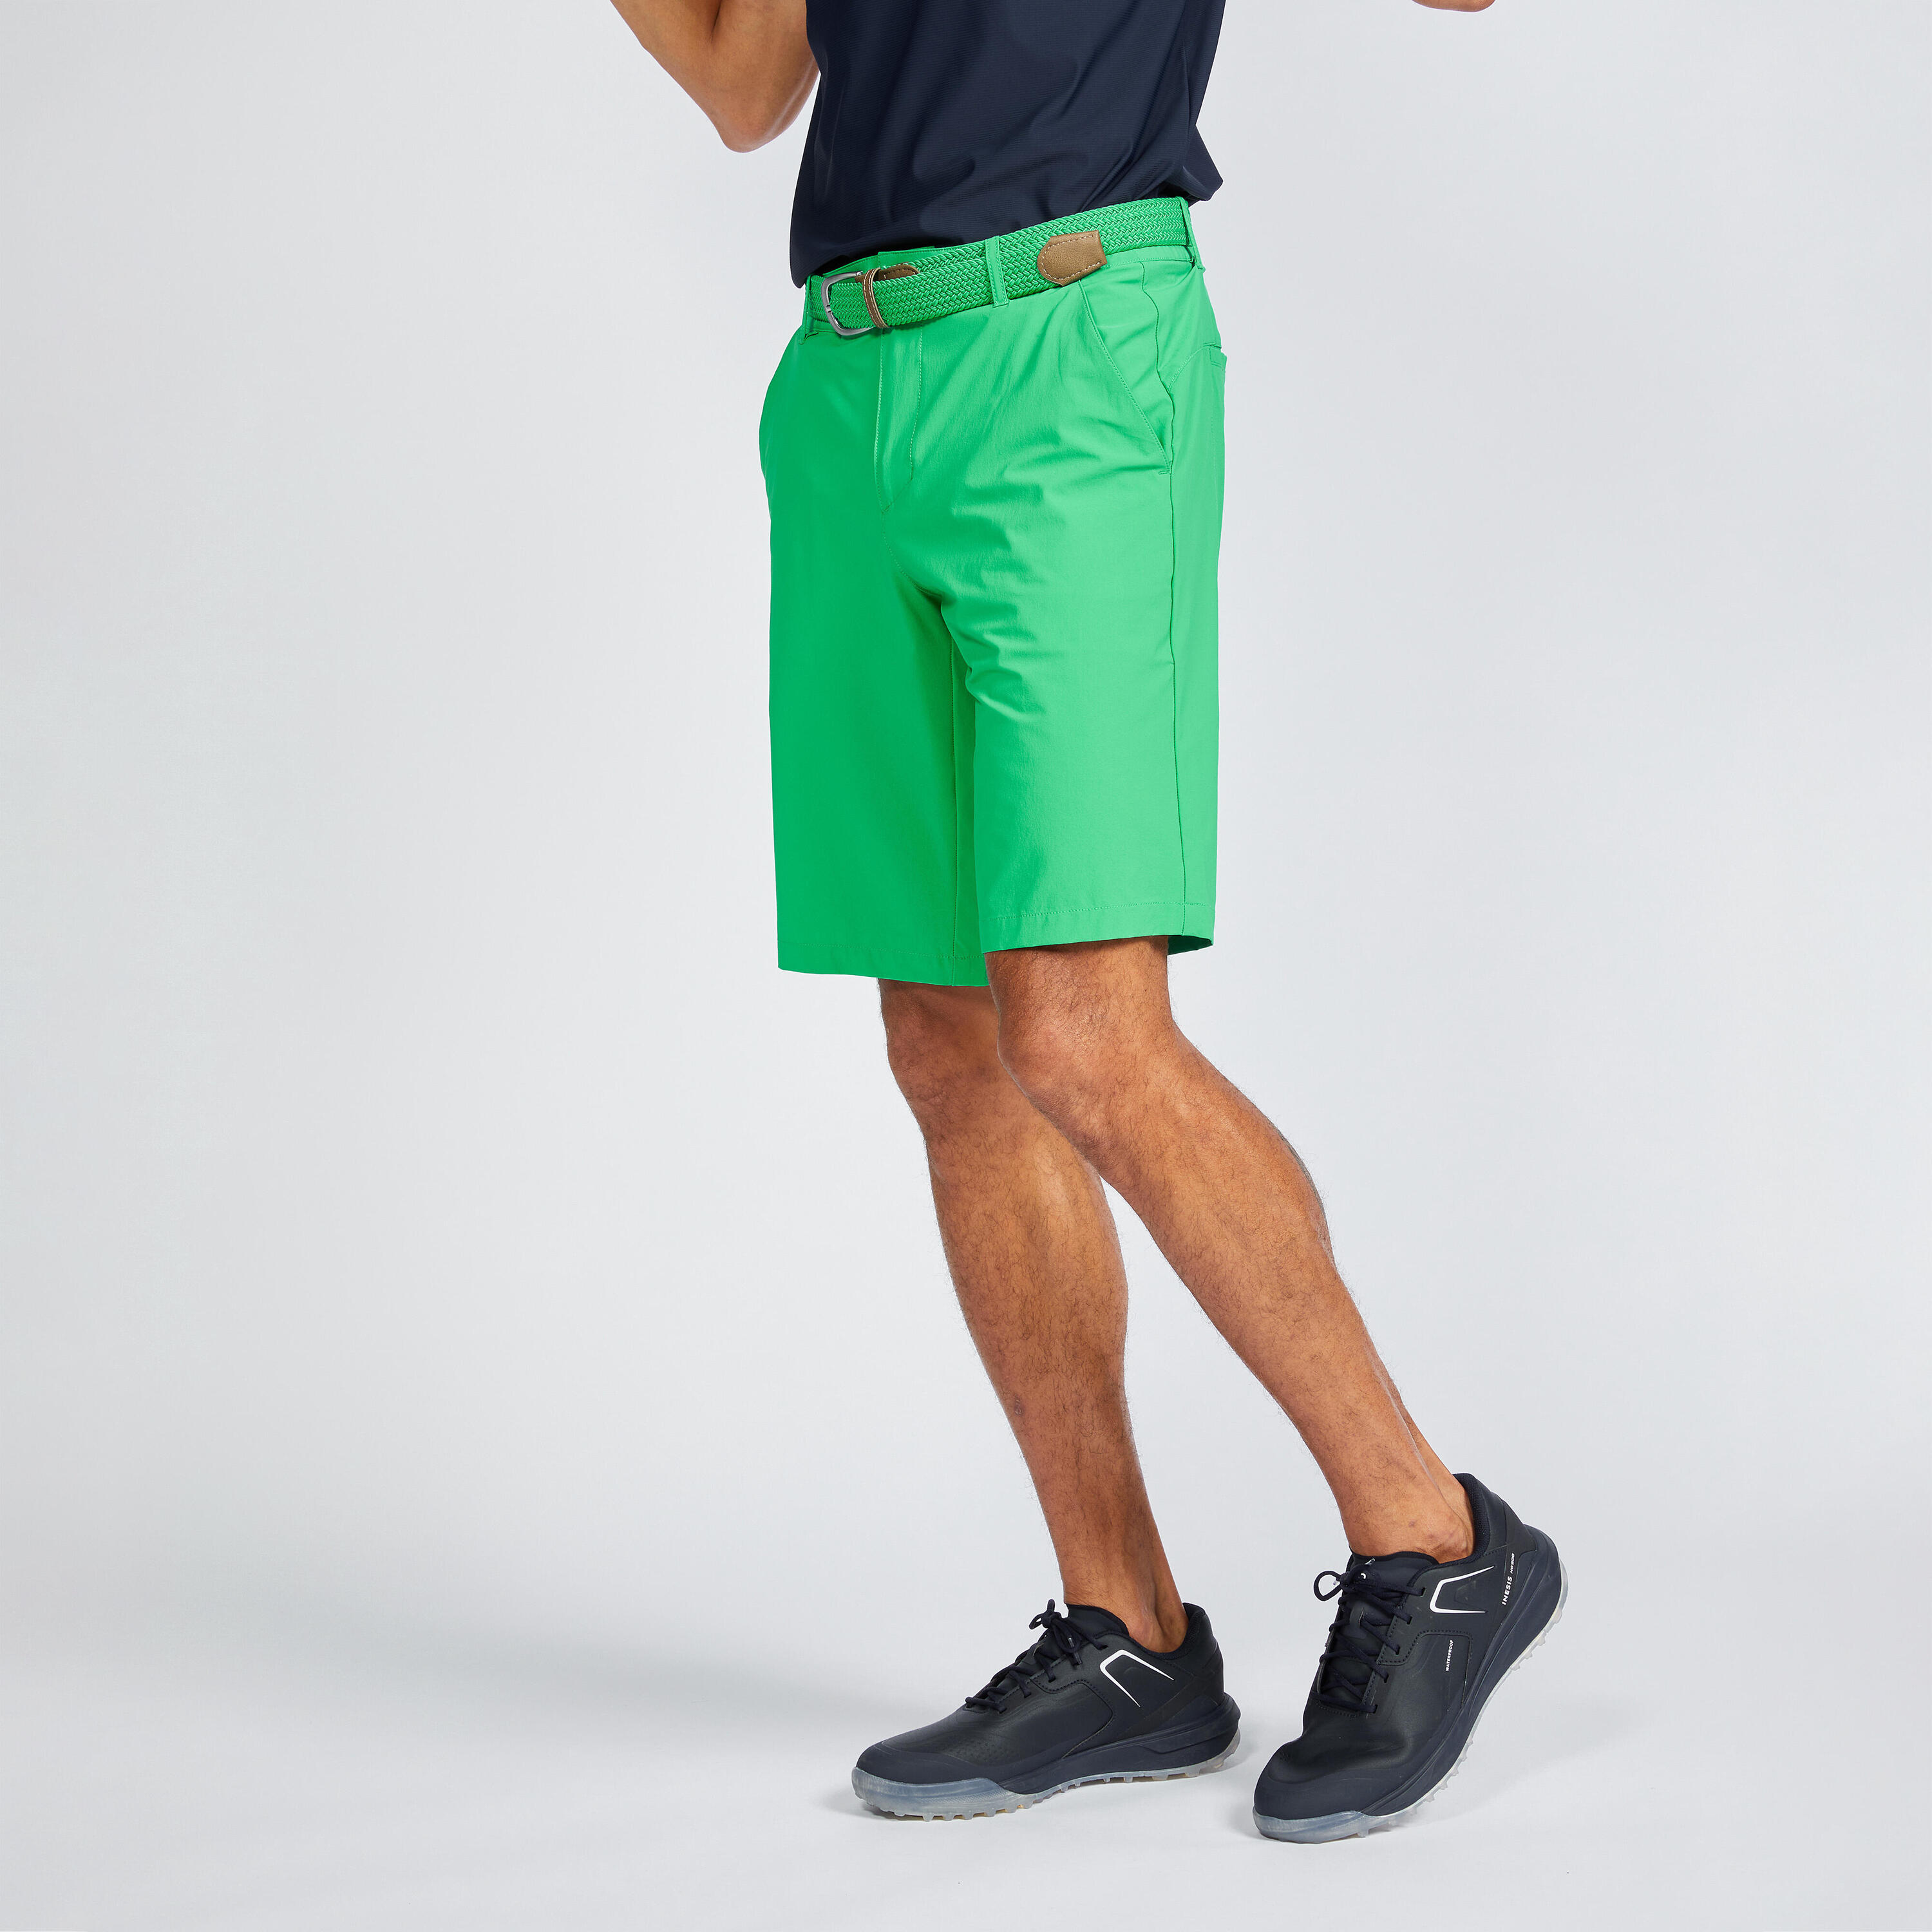 INESIS Men's golf shorts - WW500 dark green